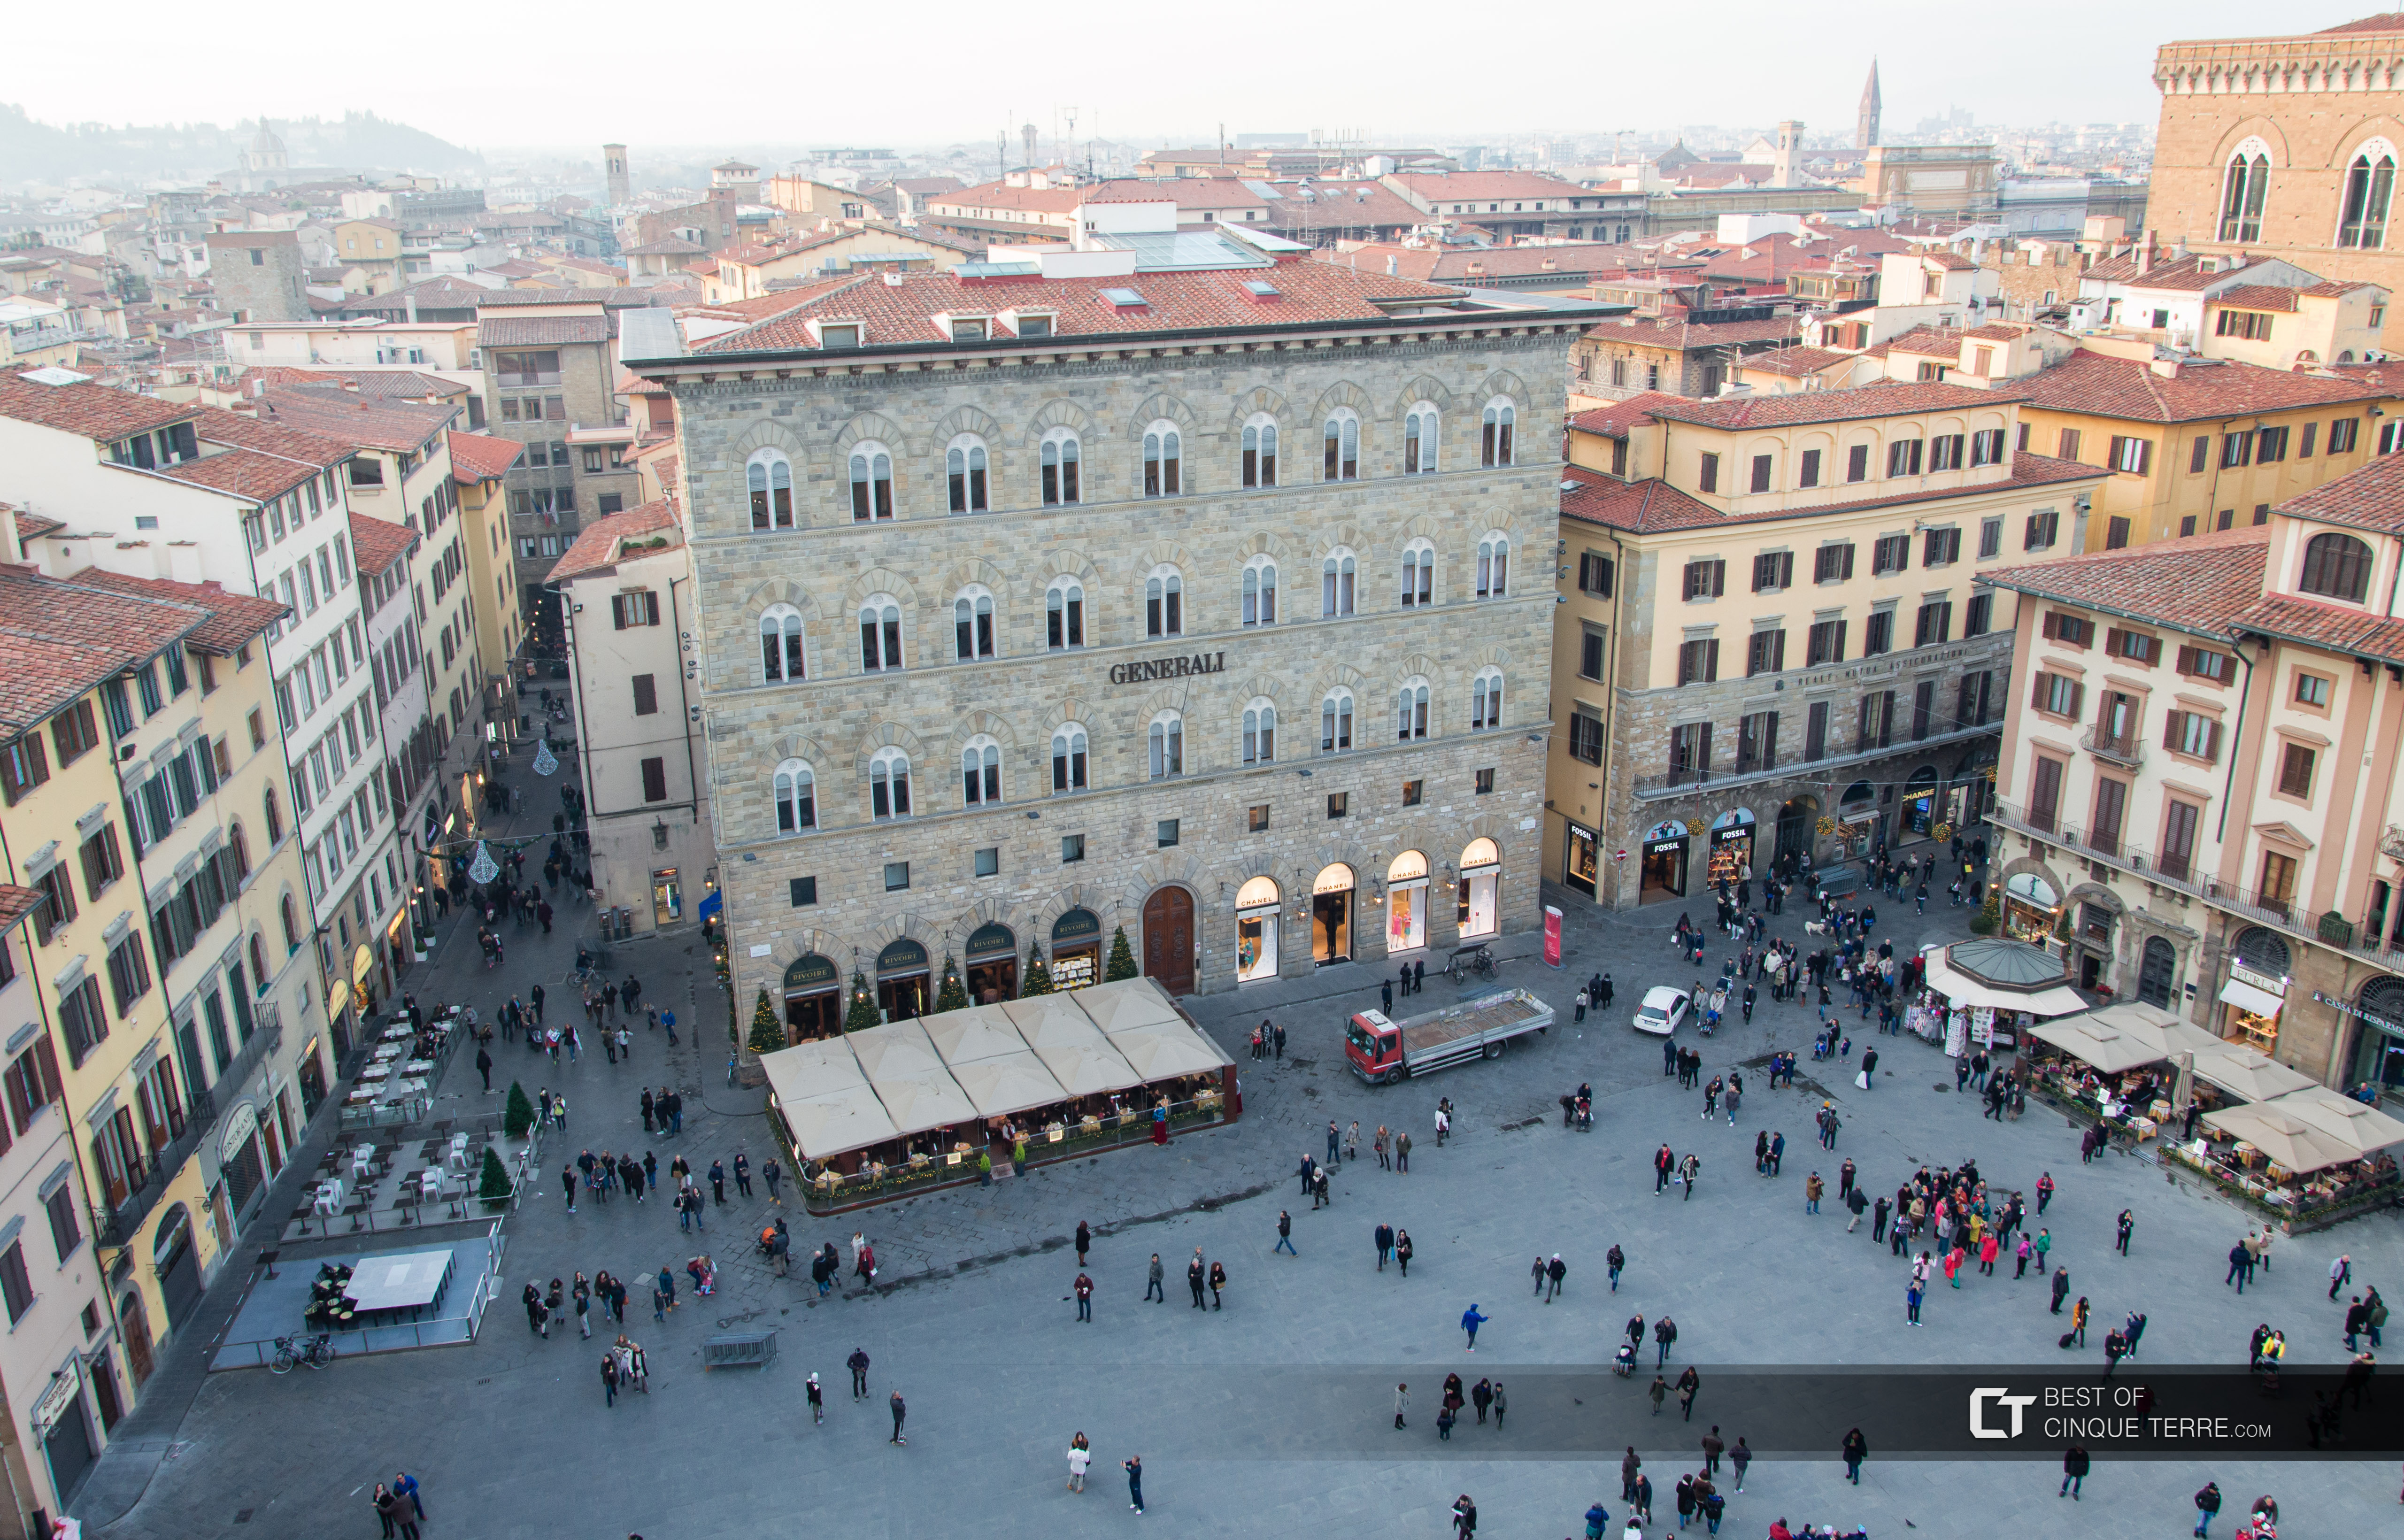 Piazza della Signoria vom Turm des Palazzo Vecchio aus gesehen, Florenz, Italien